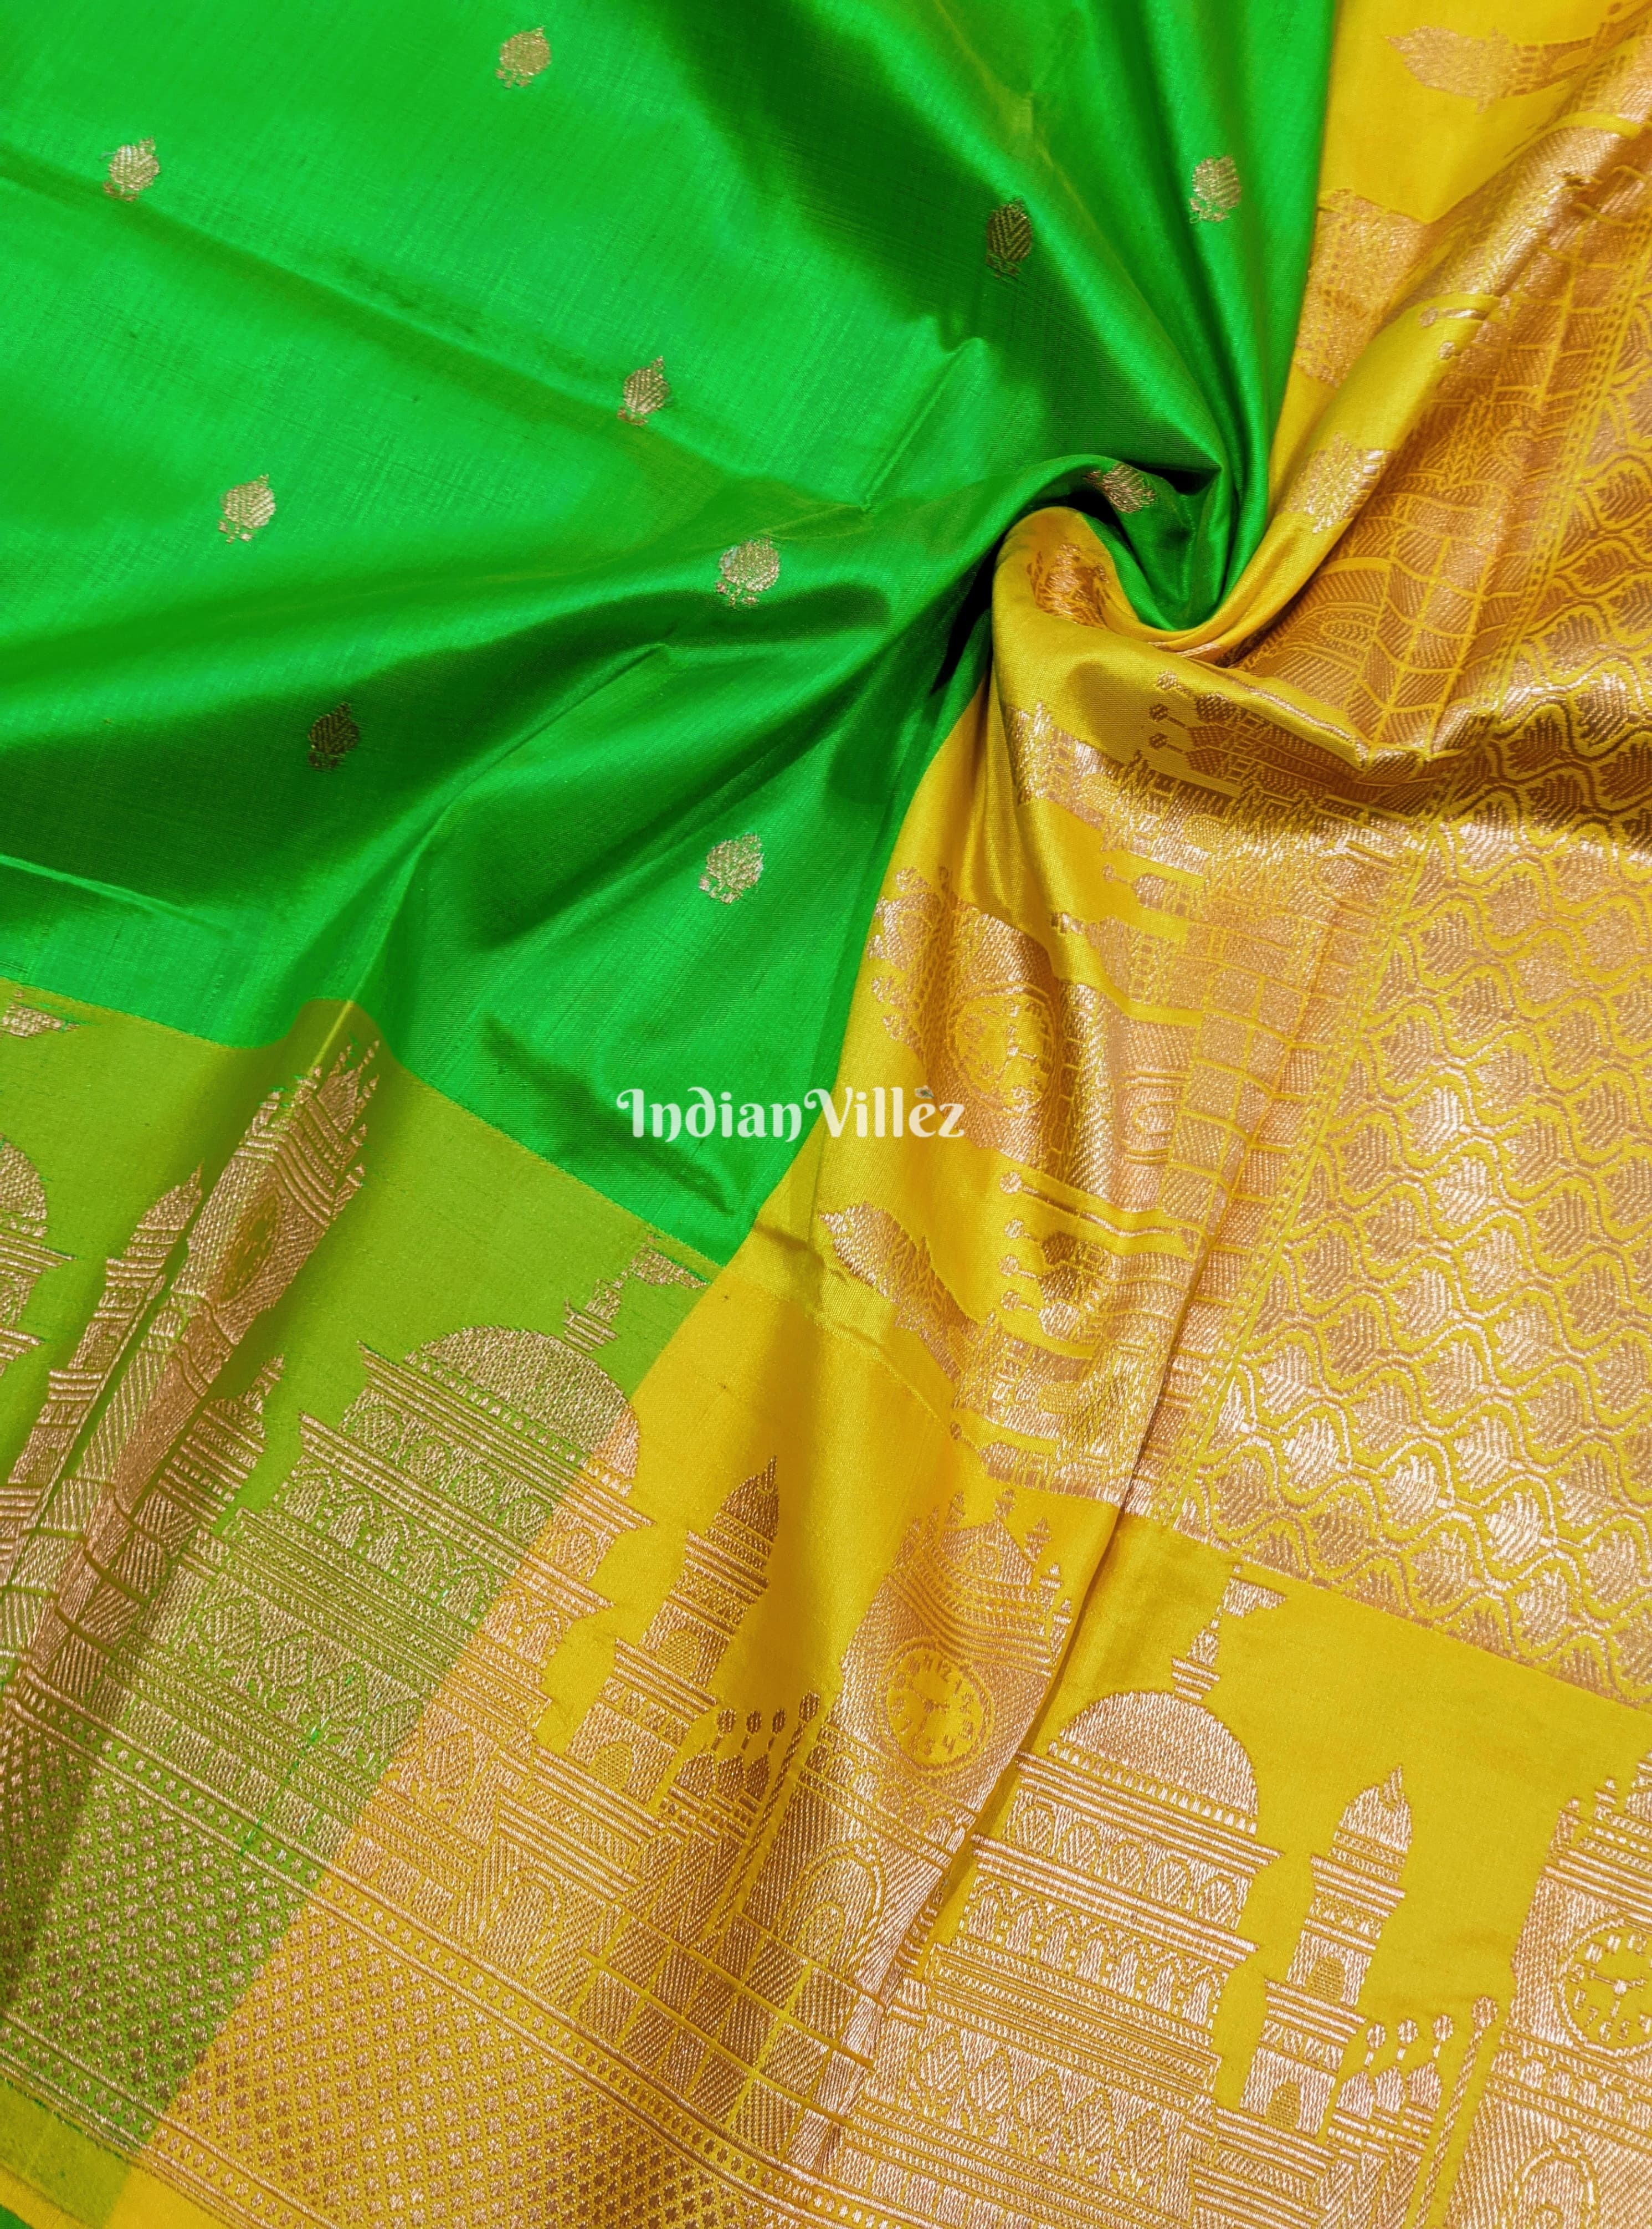 Green Banarasi Katan Silk Saree Inspired by Big Ben, London & United States Capitol, Washington DC